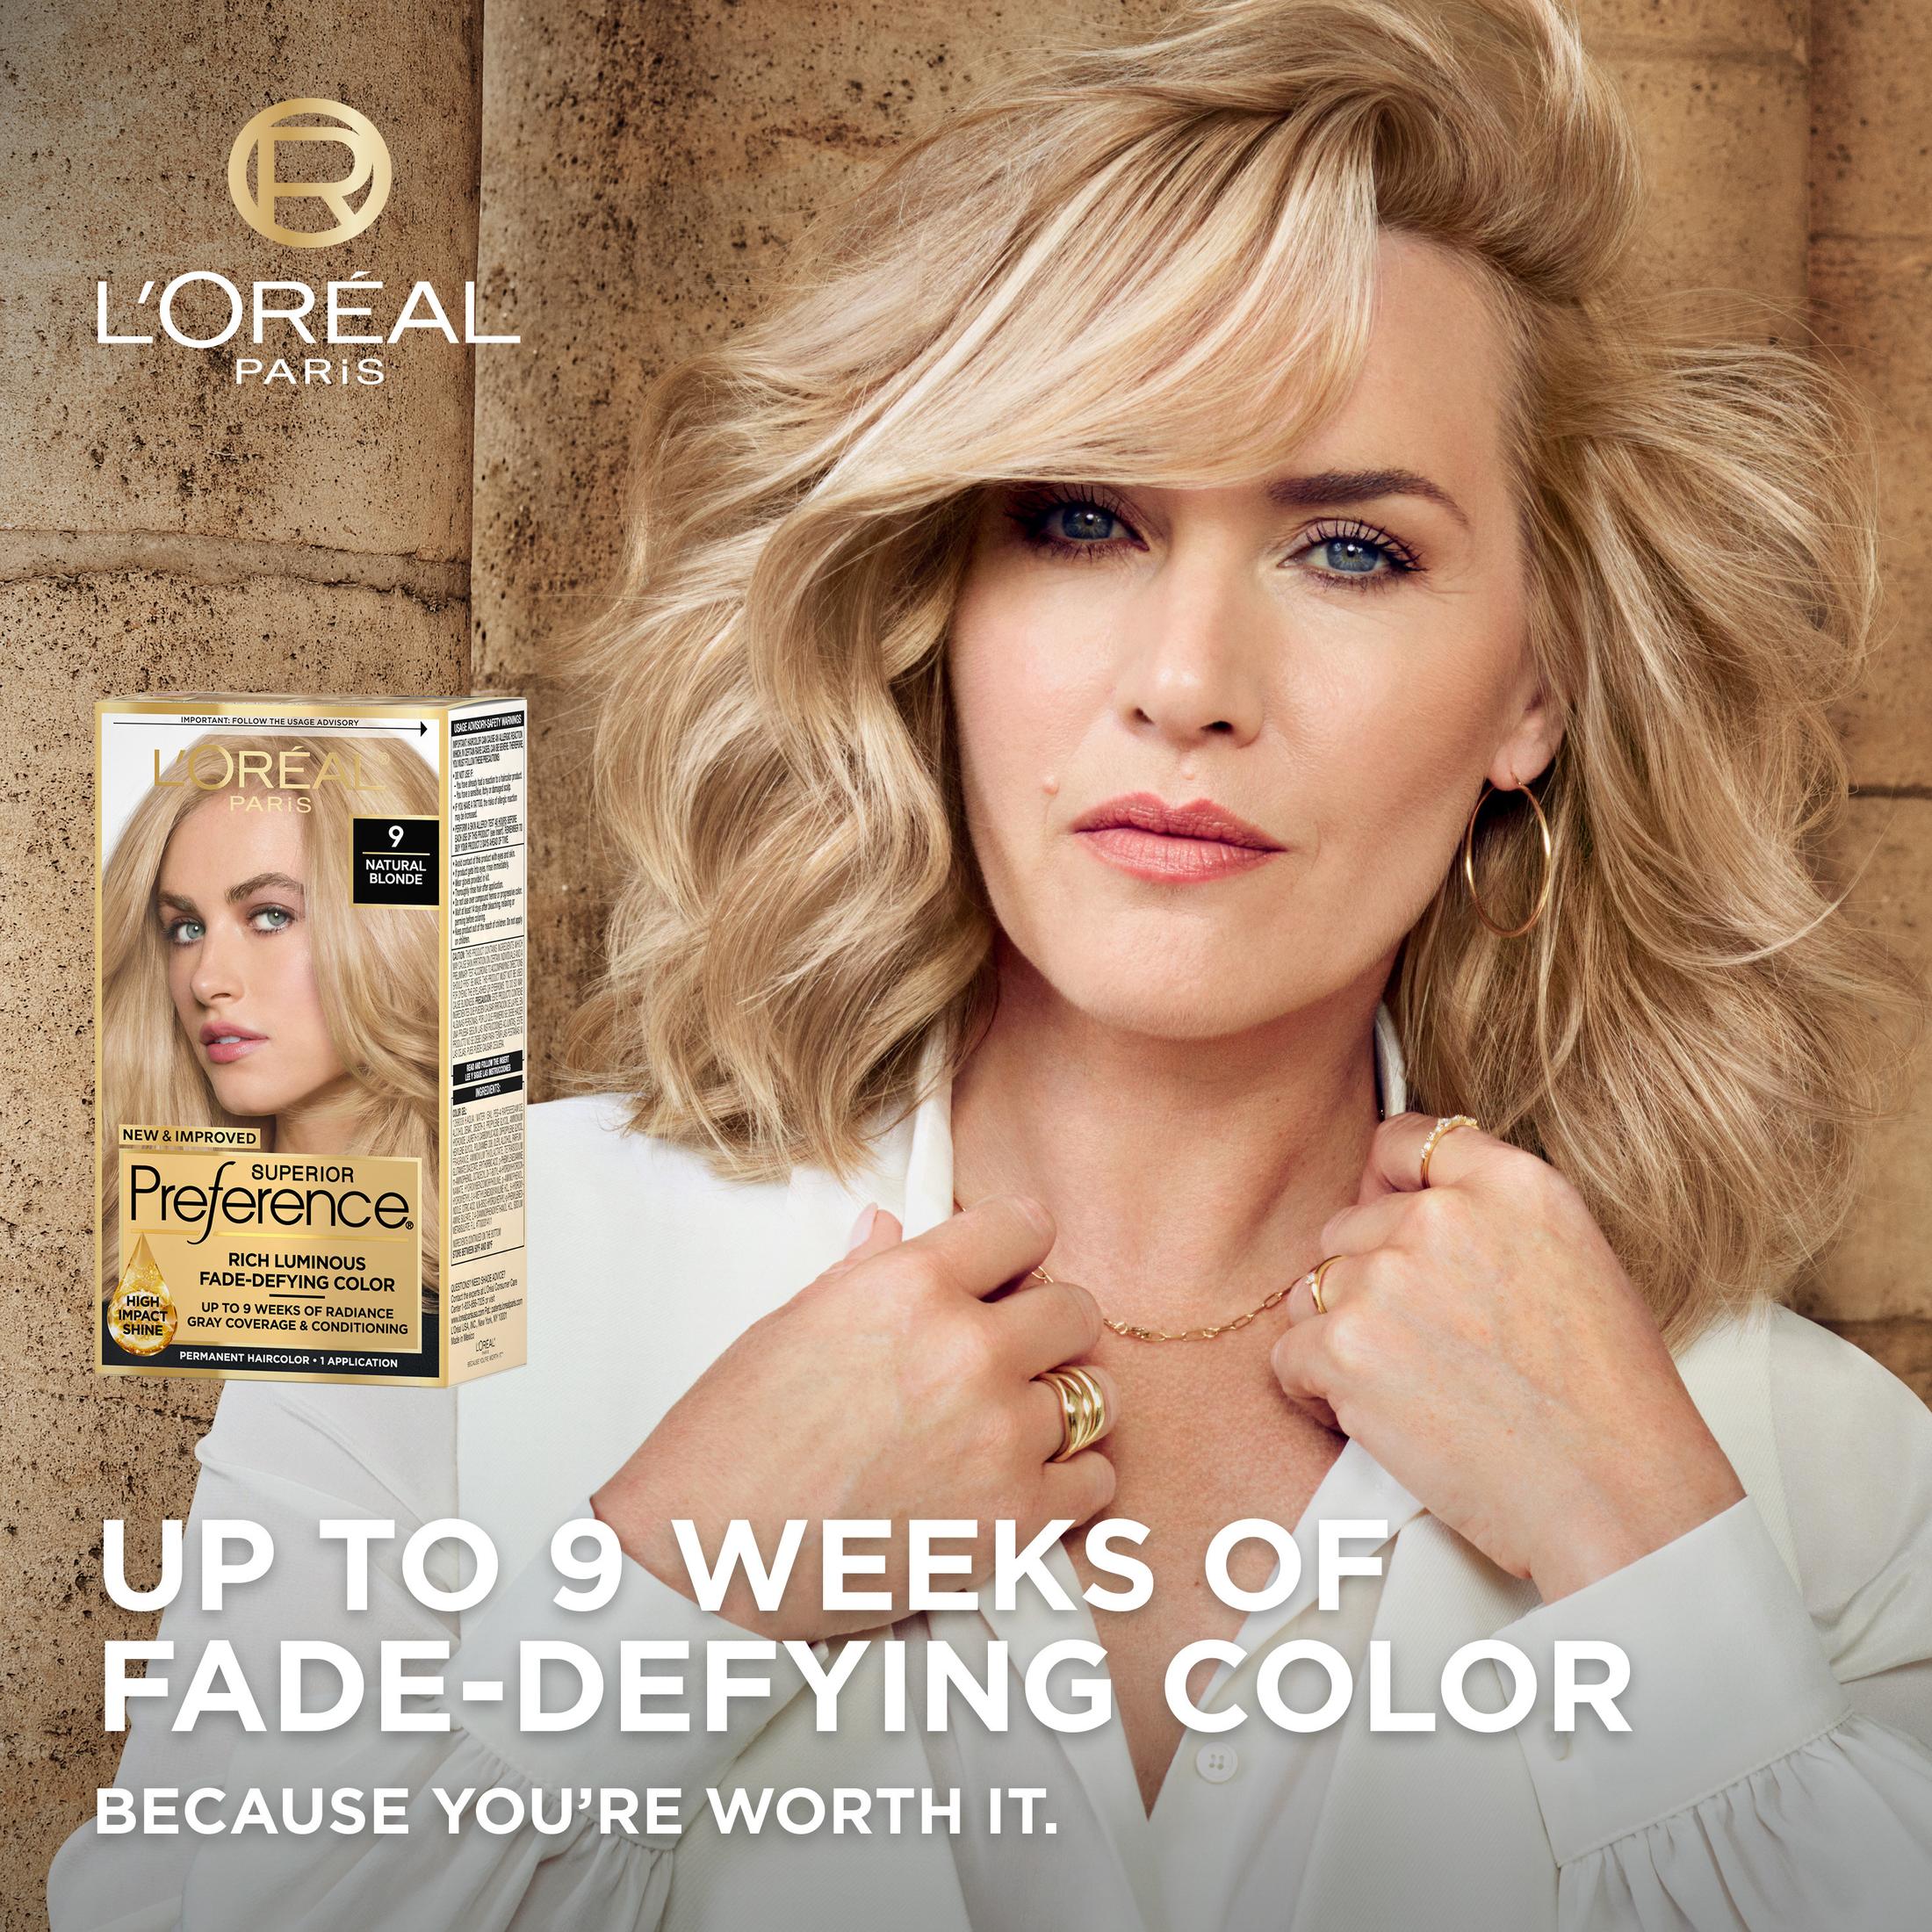 L'Oreal Paris Superior Preference Permanent Hair Color, 9.5NB Lightest Natural Blonde, 1 kit - image 3 of 9